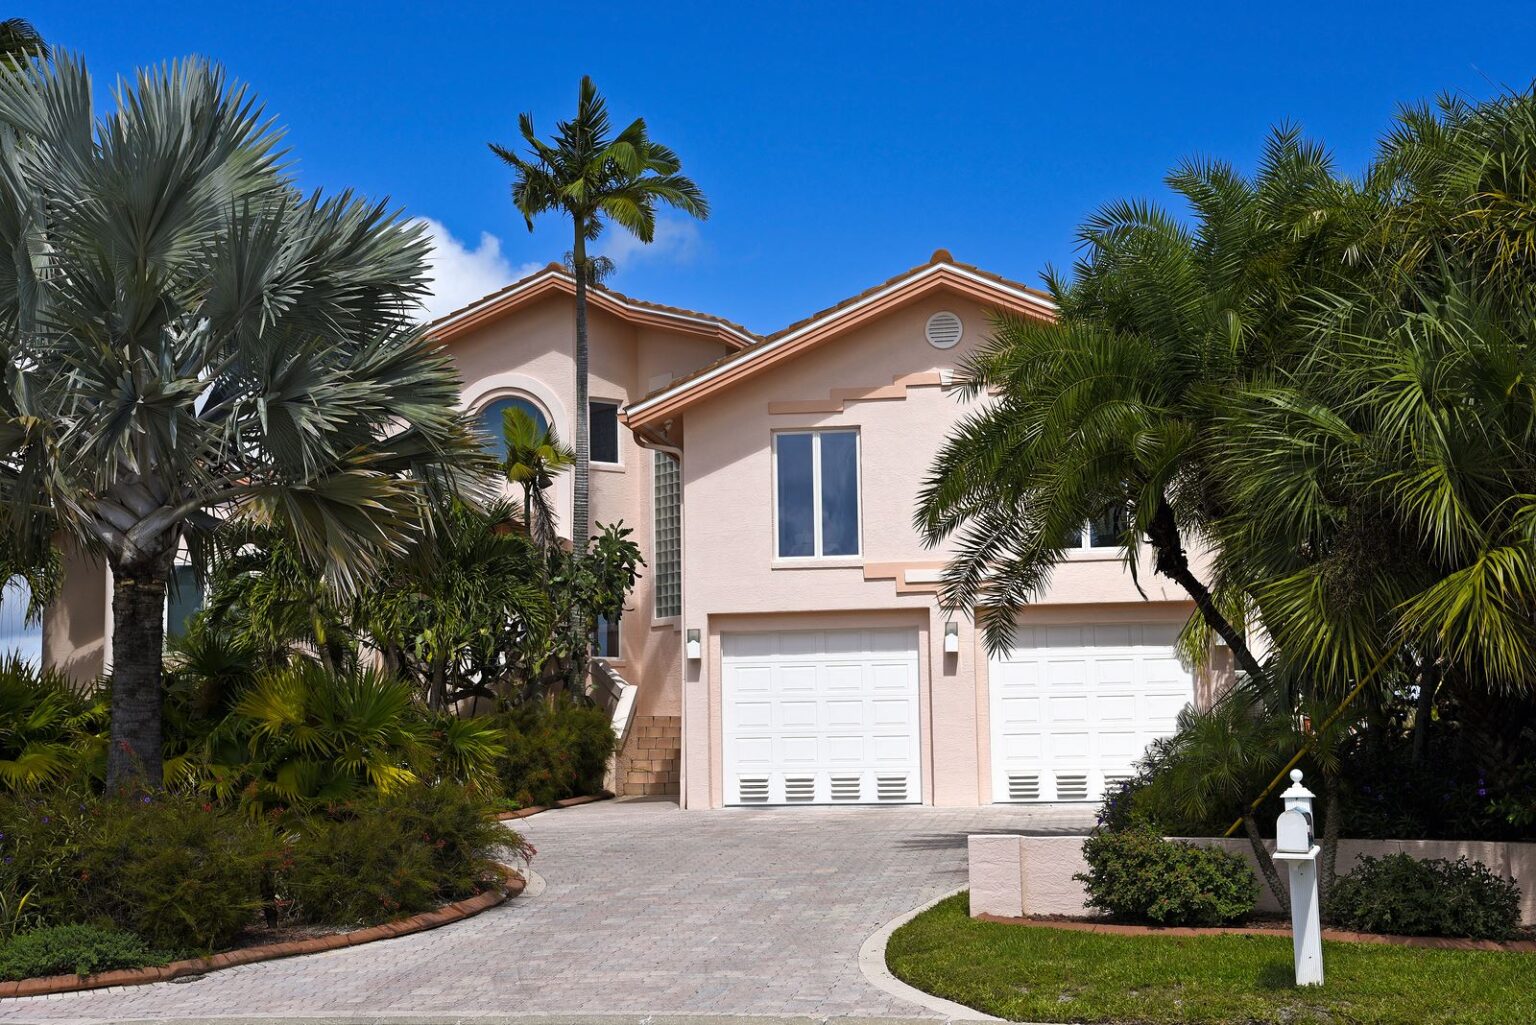 Bigstock Beautiful Florida House 120553619 2 1536x1025 